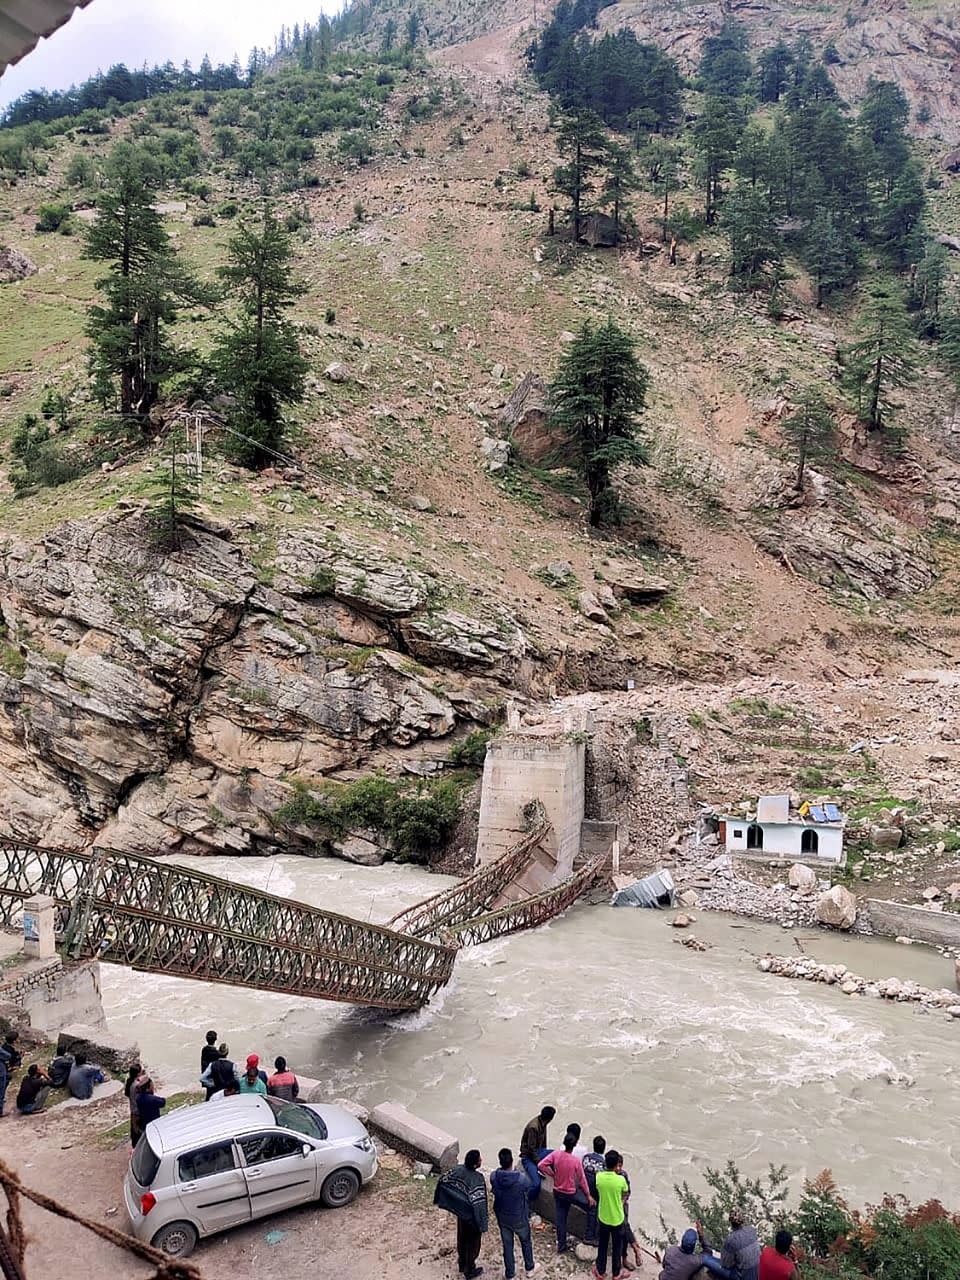 <div class="paragraphs"><p>A bridge collapsed after a landslide at Batseri of Sangla valley in Kinnaur district, Sunday, 25 July 2021. Nine people died in the landslide.</p></div>